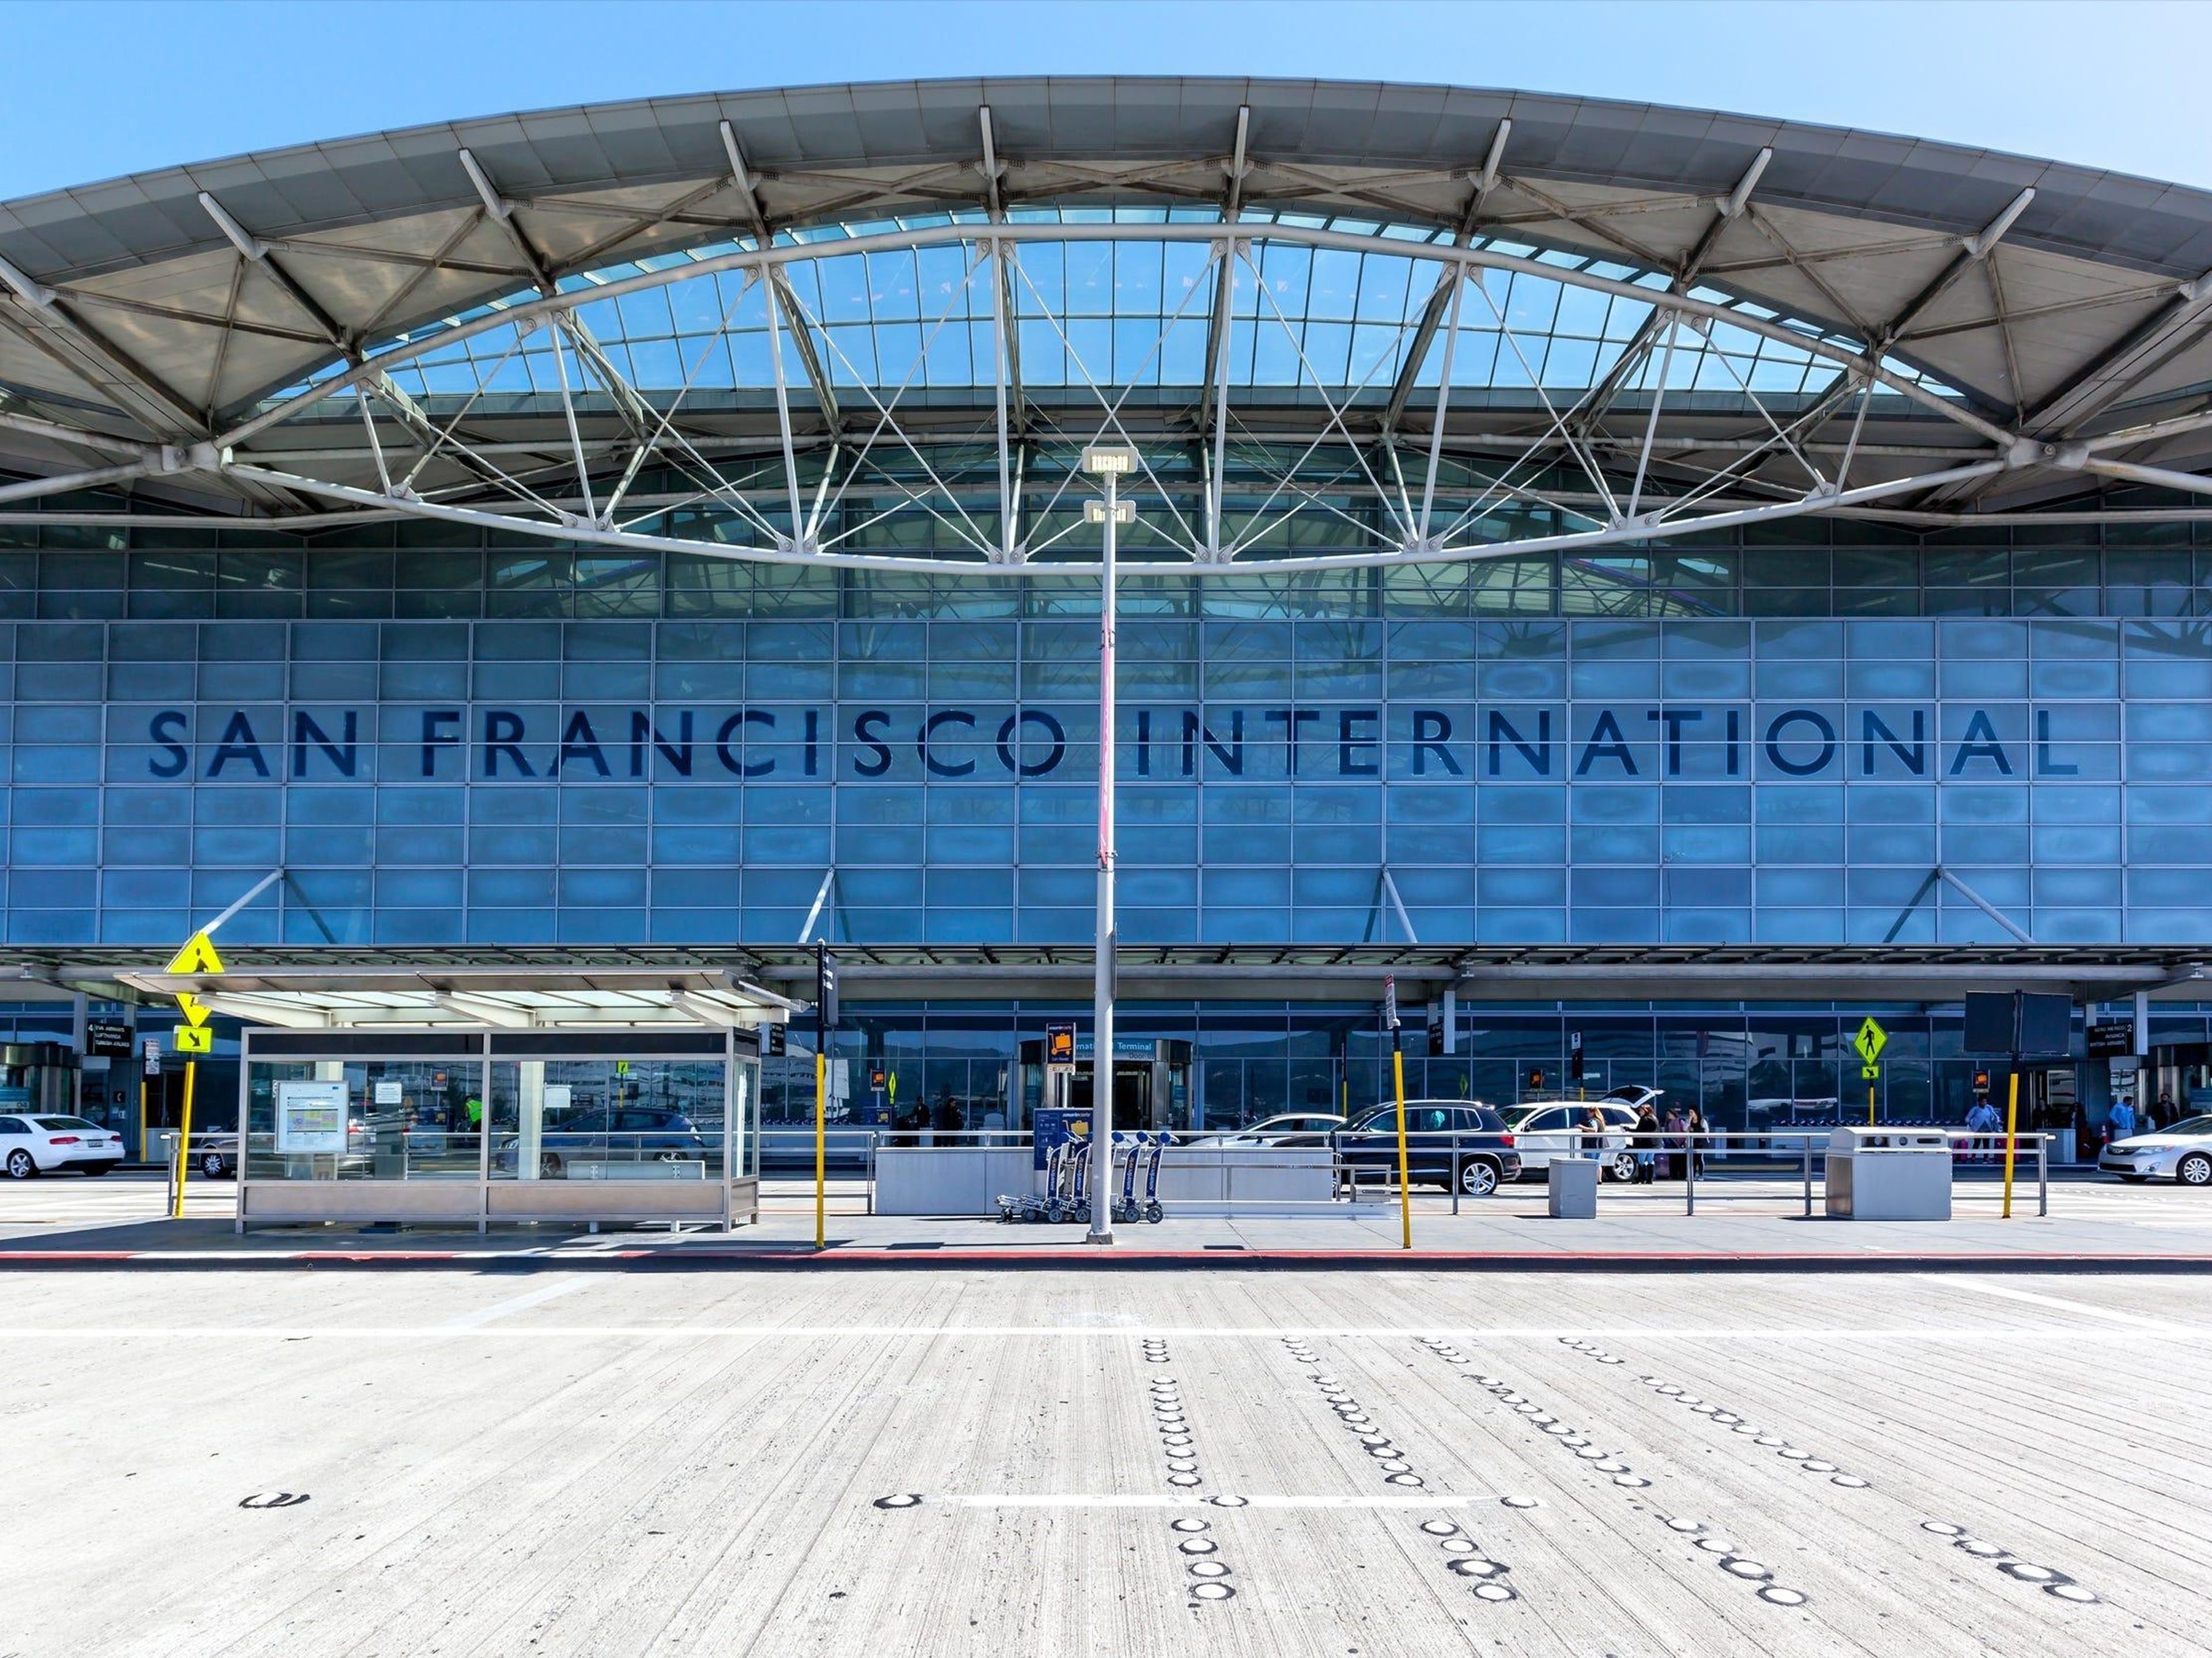 San Francisco International Airport. JHVEPhoto / Shutterstock.com